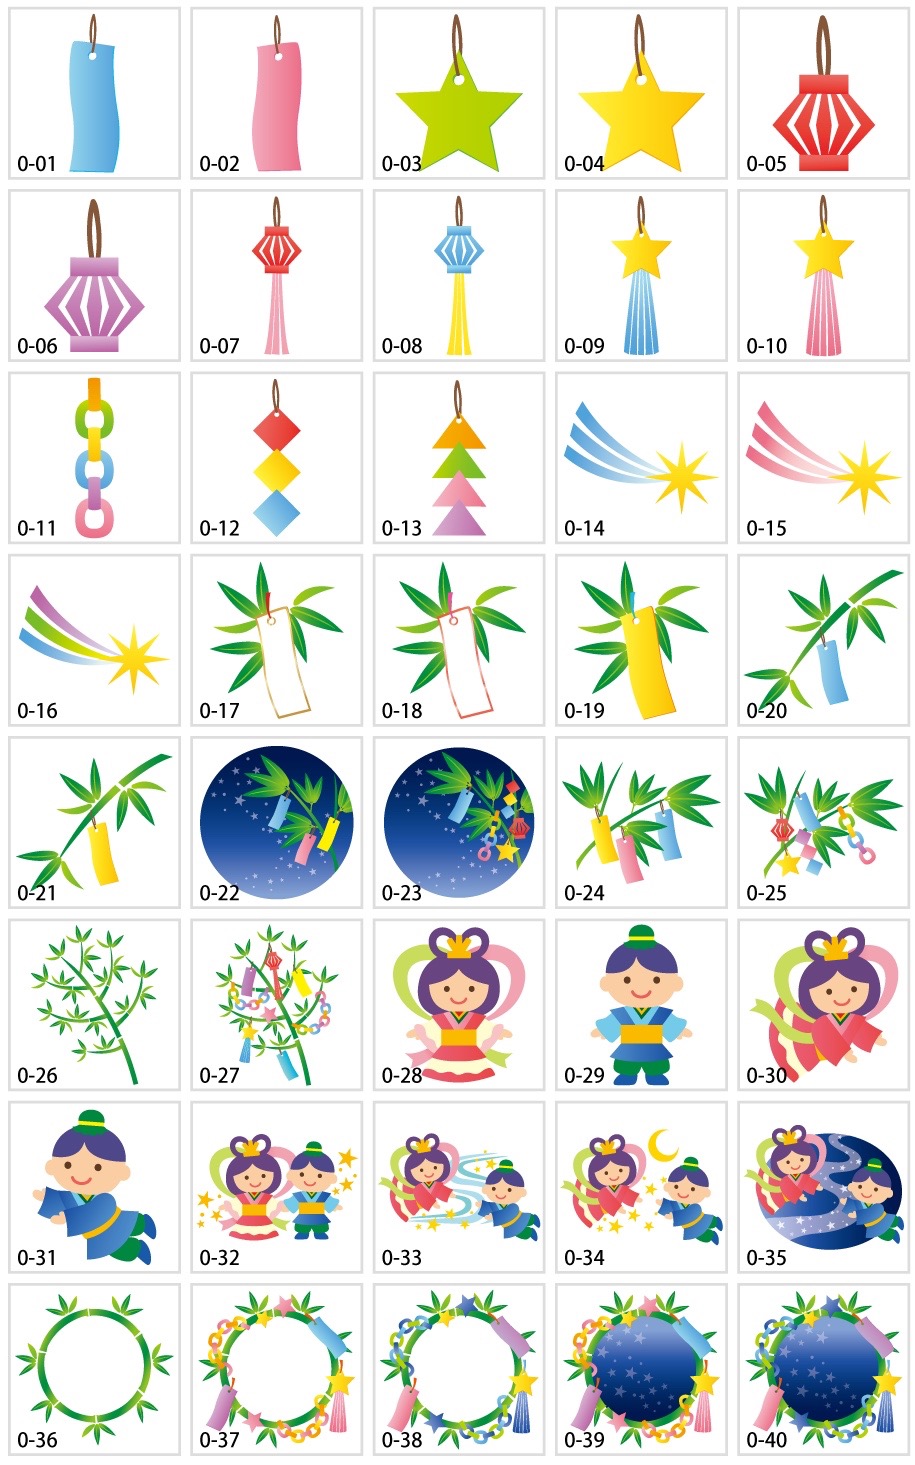 Tài liệu minh họa Tanabata